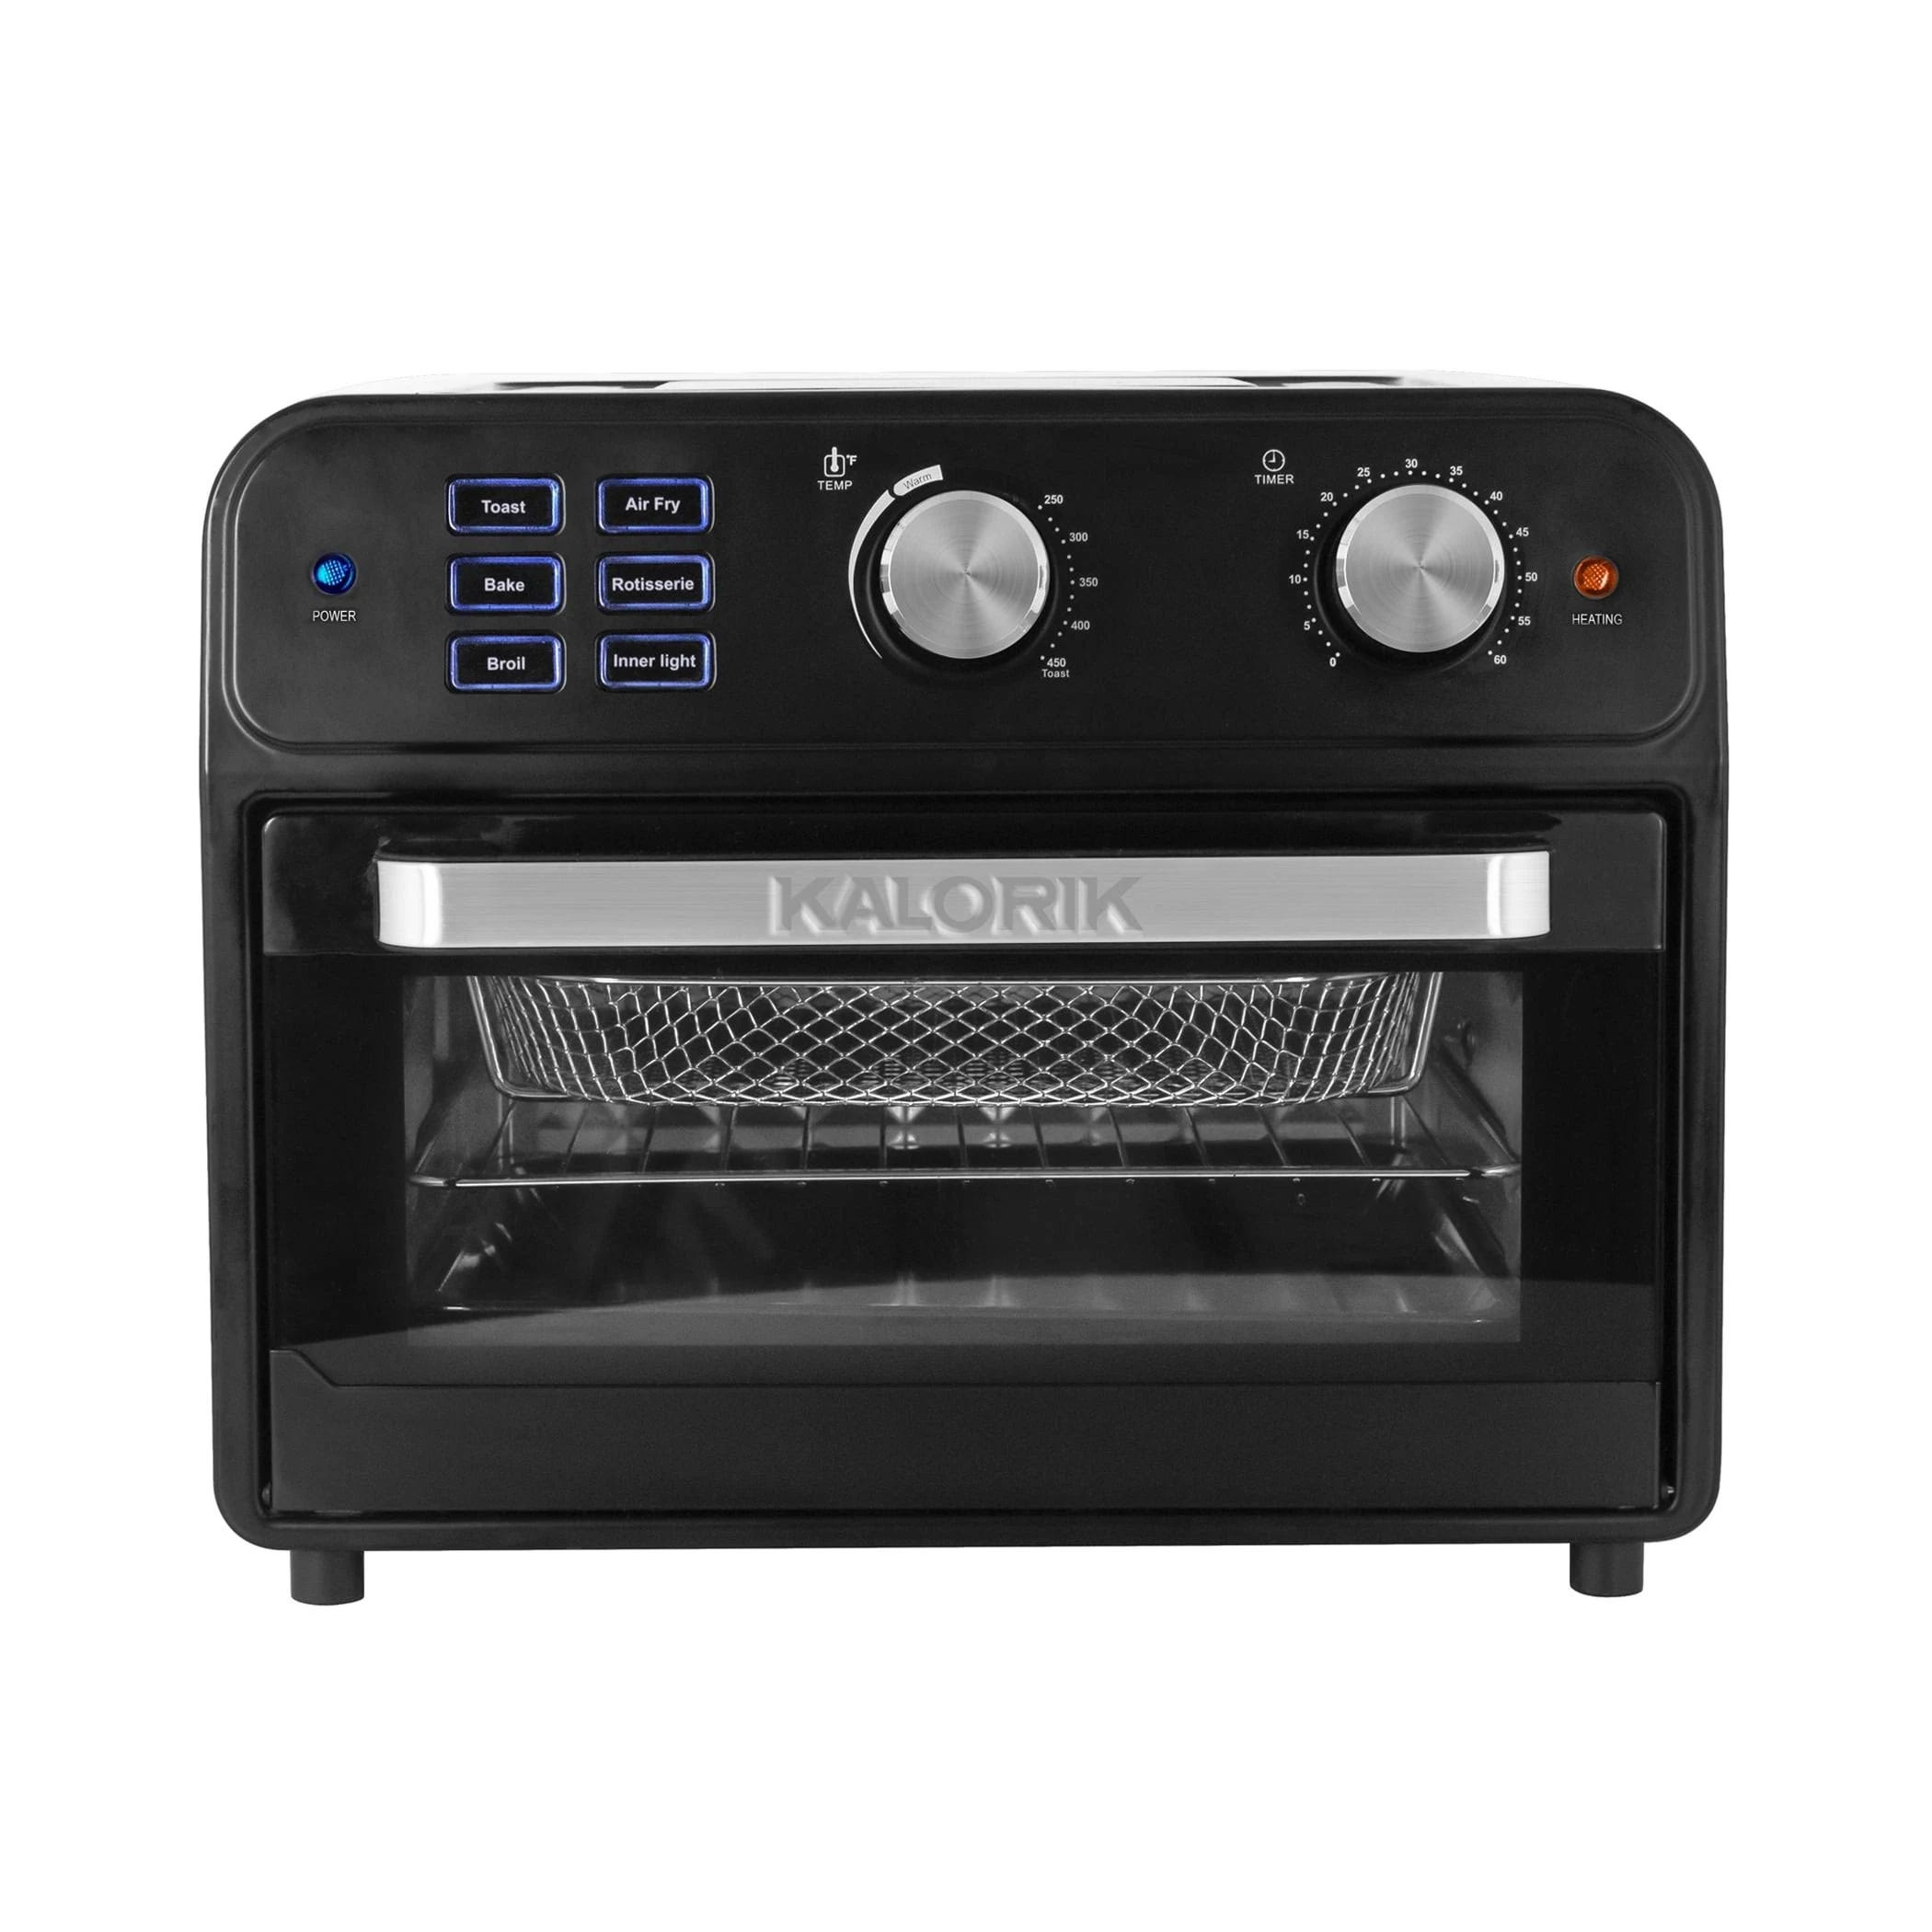 Kalorik 22 Quart Digital Air Fryer Toaster Oven: Multi-Functional Air Frying and Baking Appliance | Image